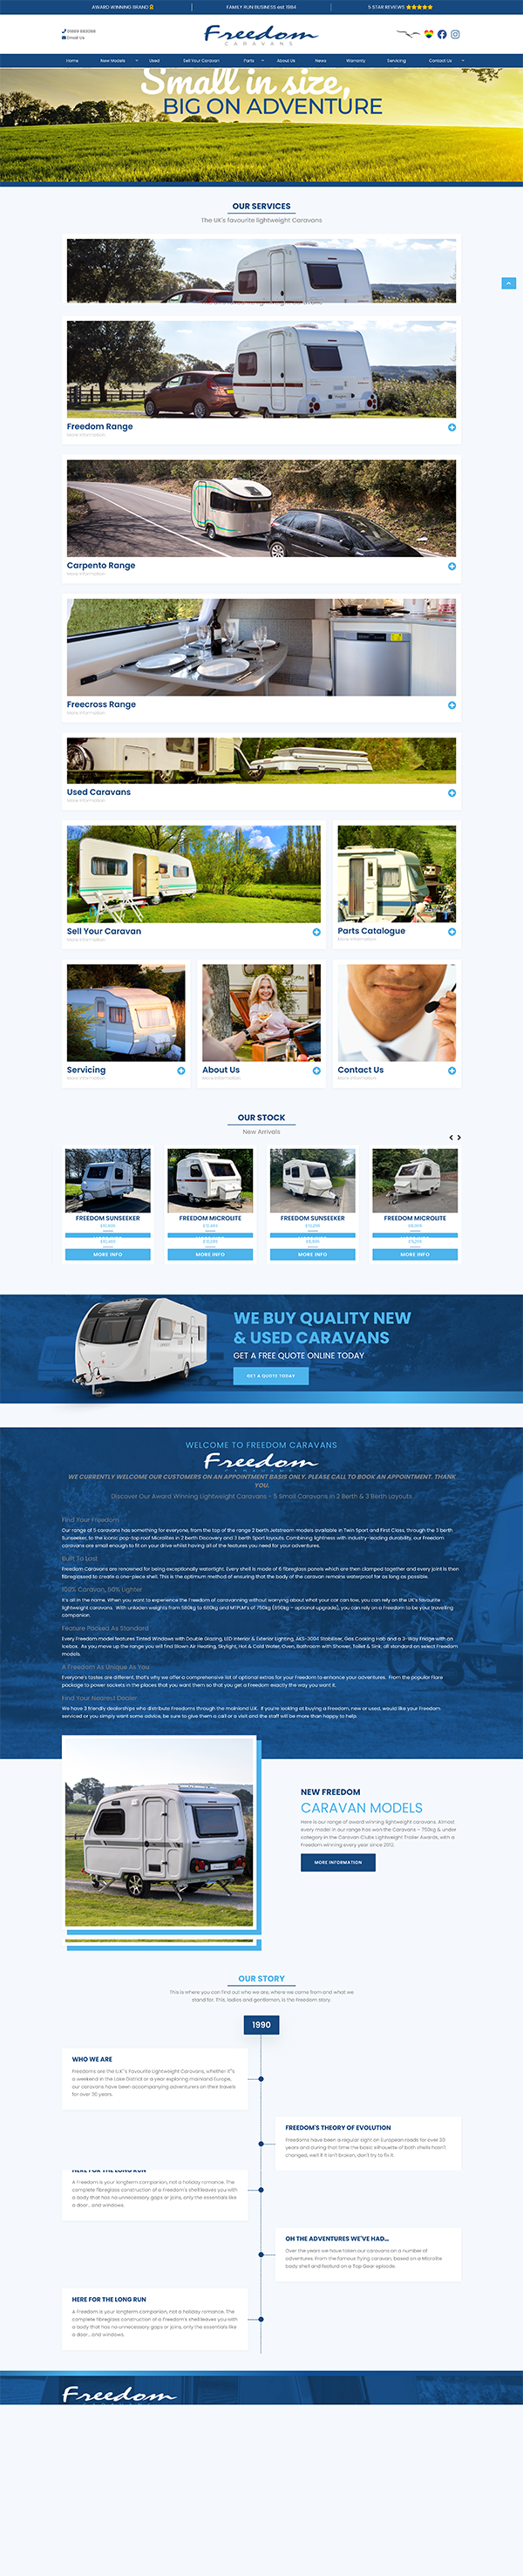 Freedom Caravans